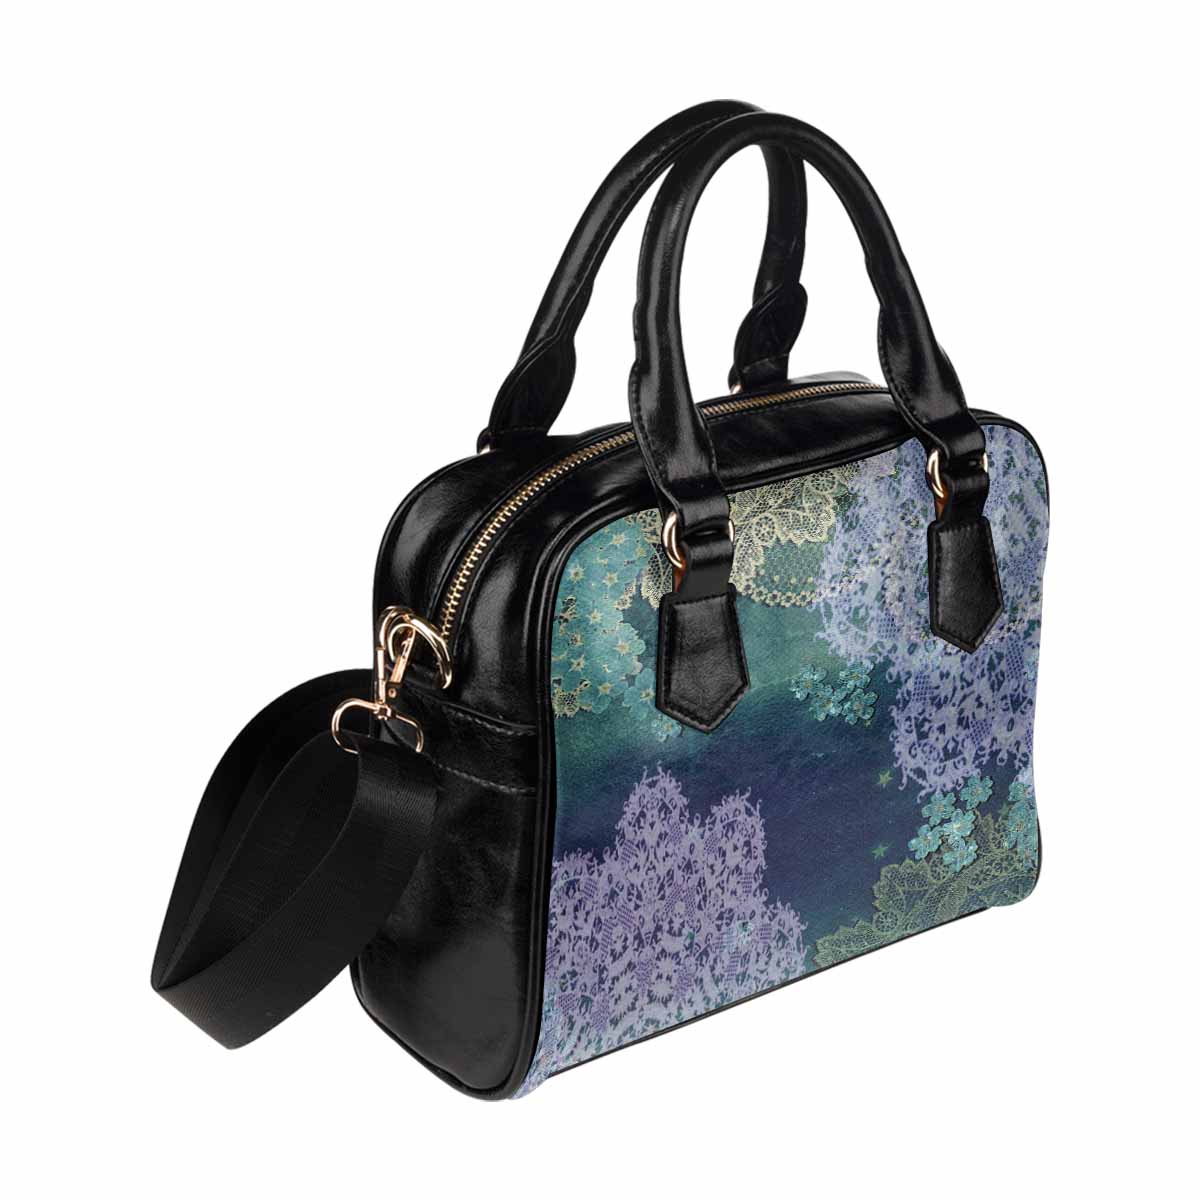 Victorian lace print, cute handbag, Mod 19163453, design 05